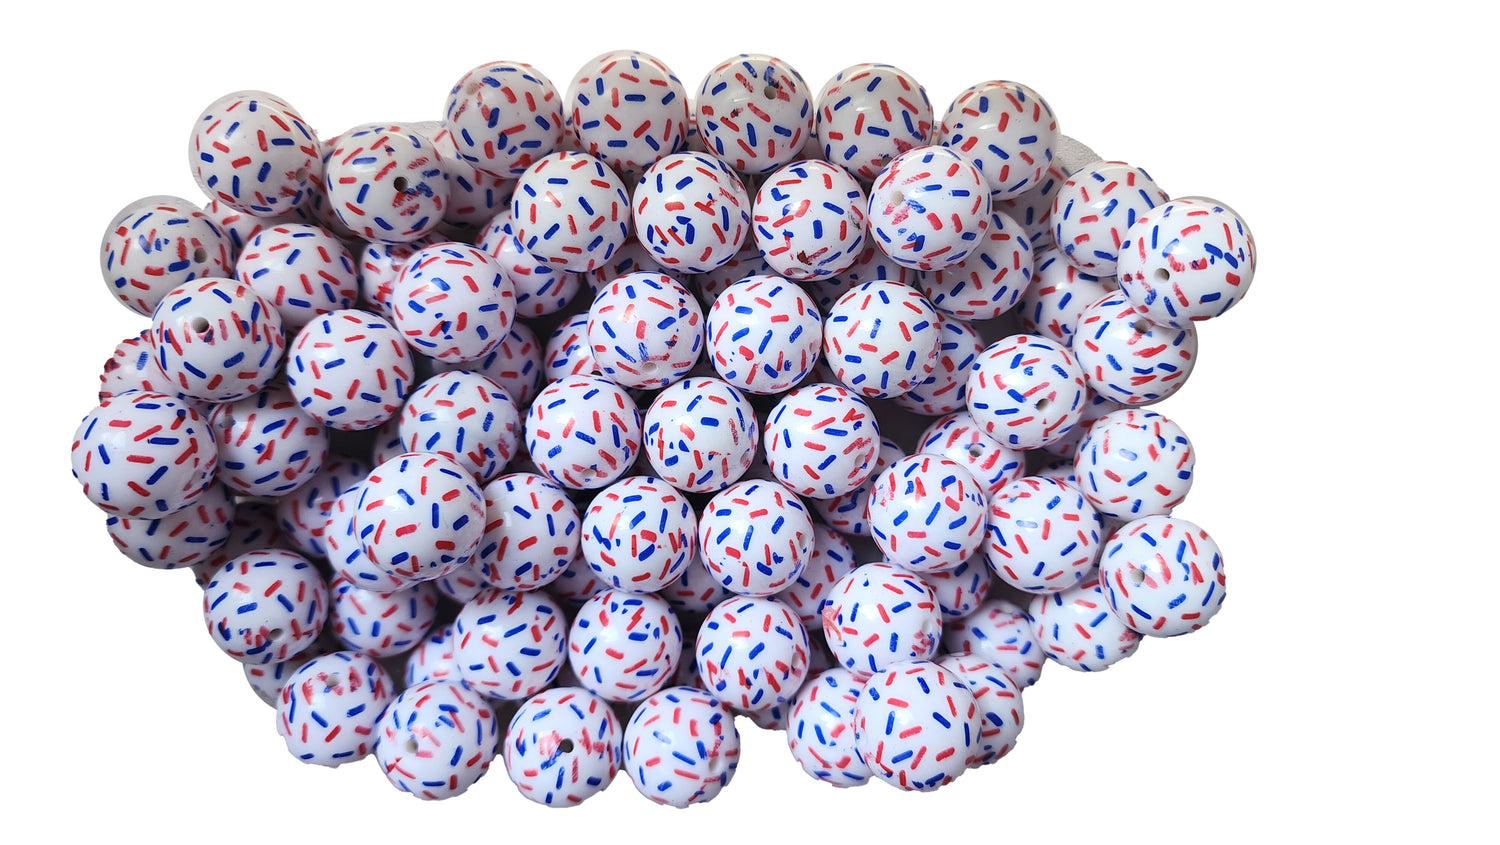 USA sprinkles 20mm printed wholesale bubblegum beads